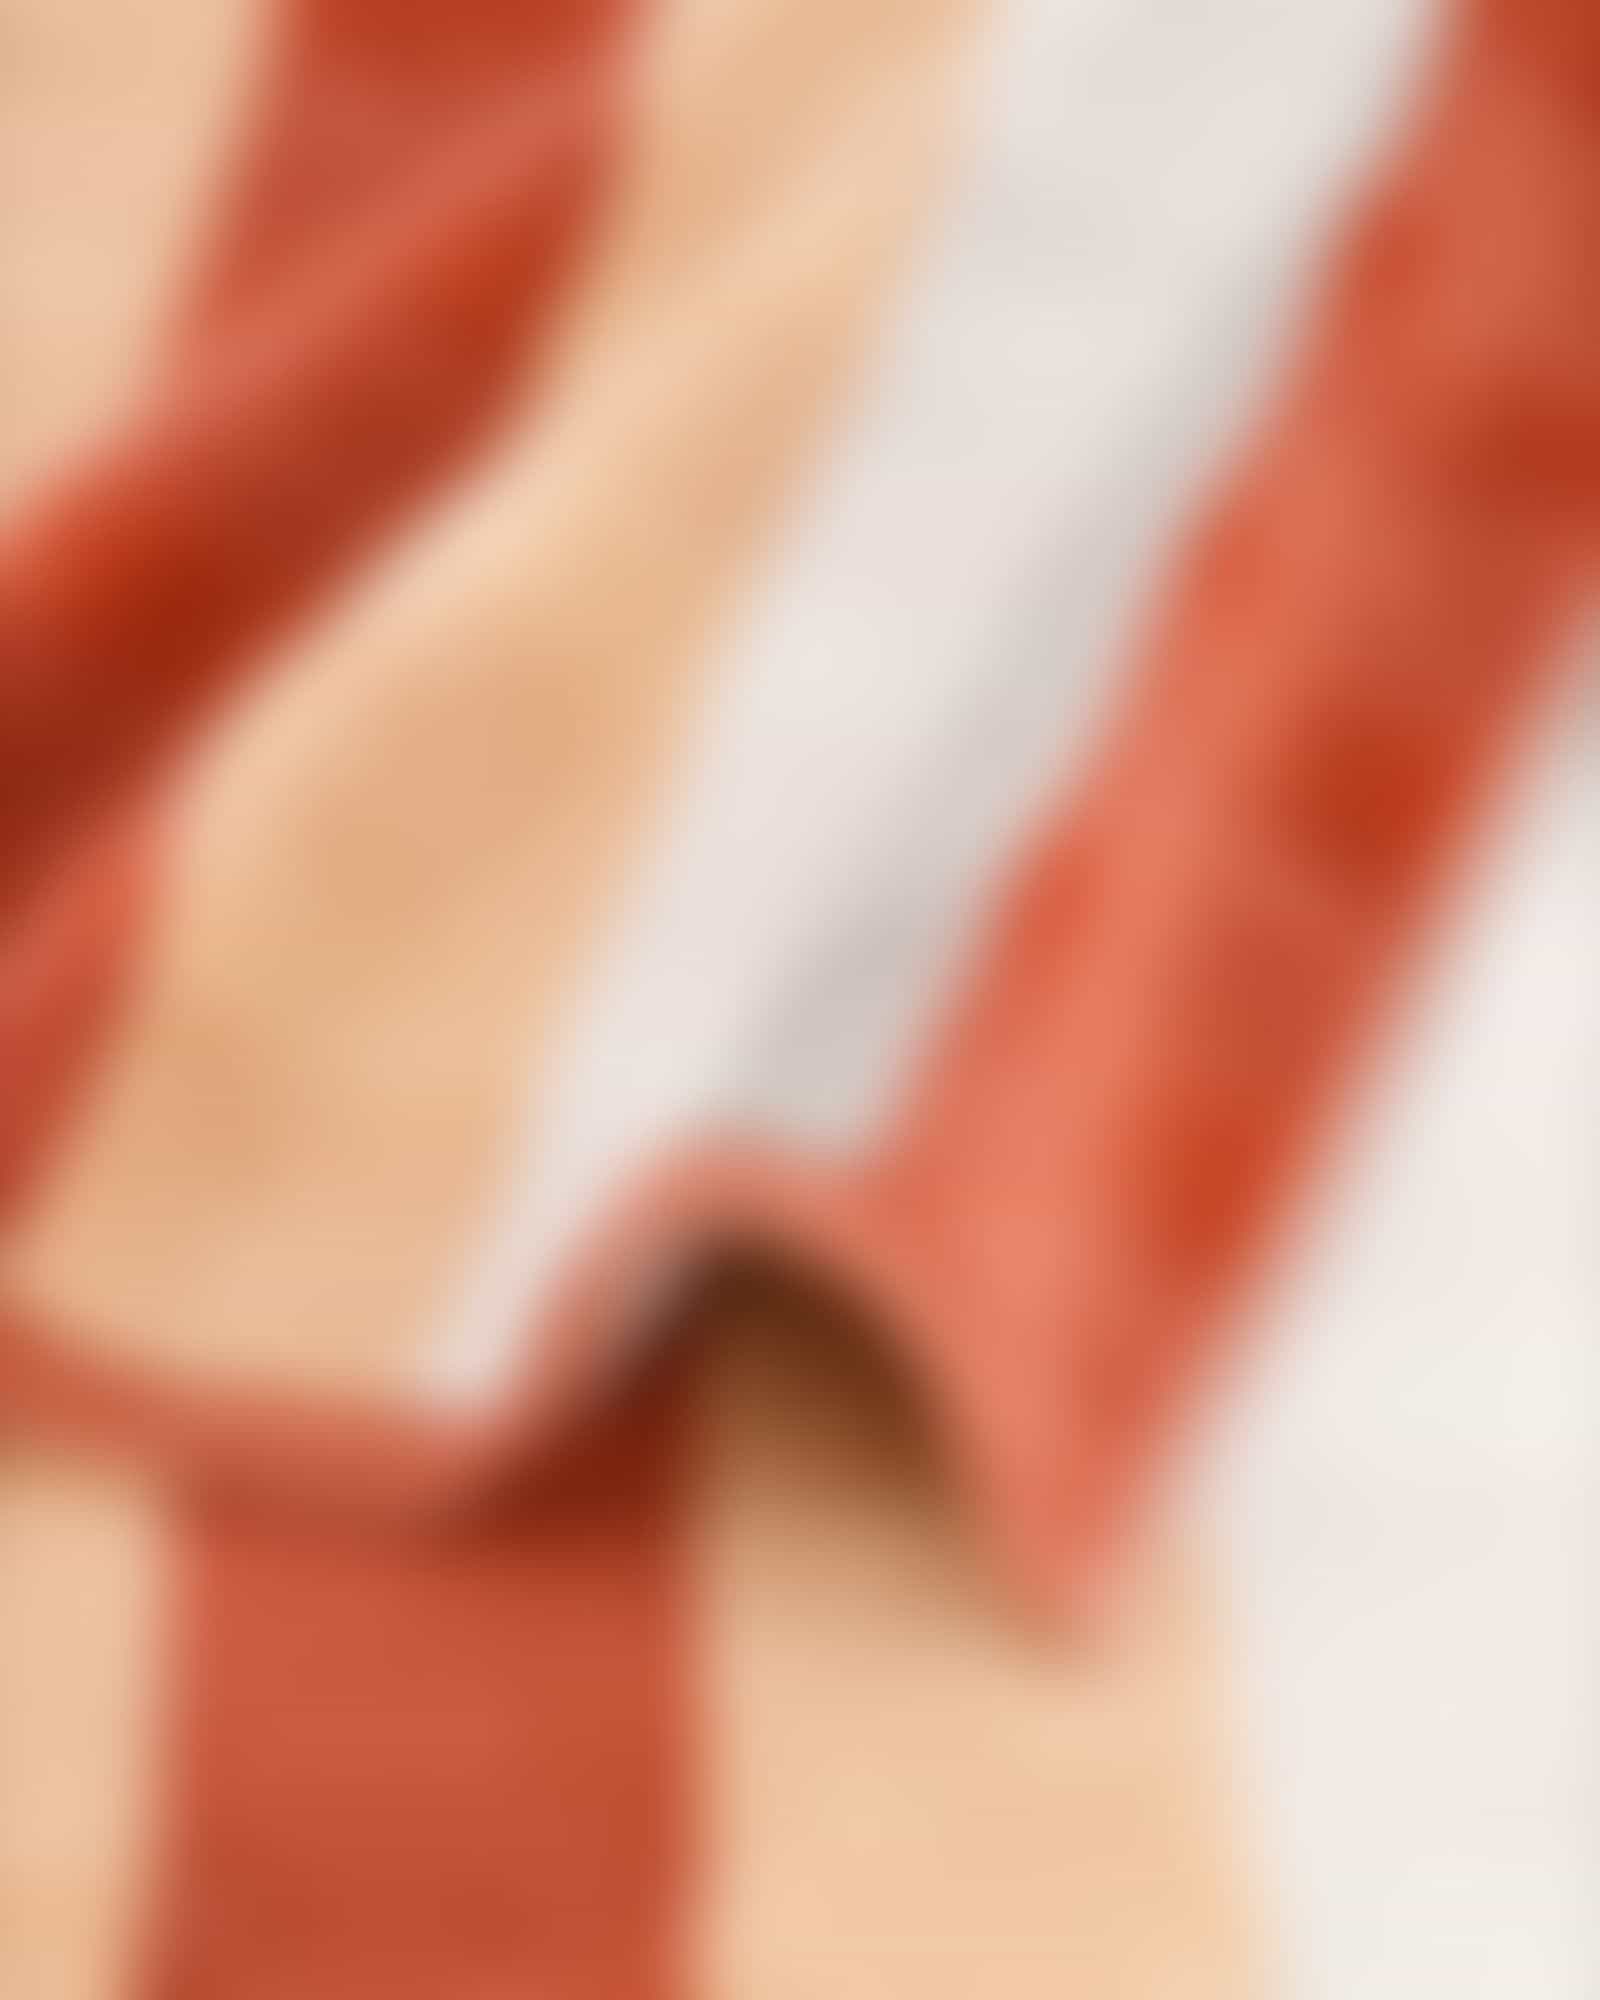 Cawö Handtücher Noblesse Stripe 1087 - Farbe: brick - 33 - Duschtuch 80x150 cm